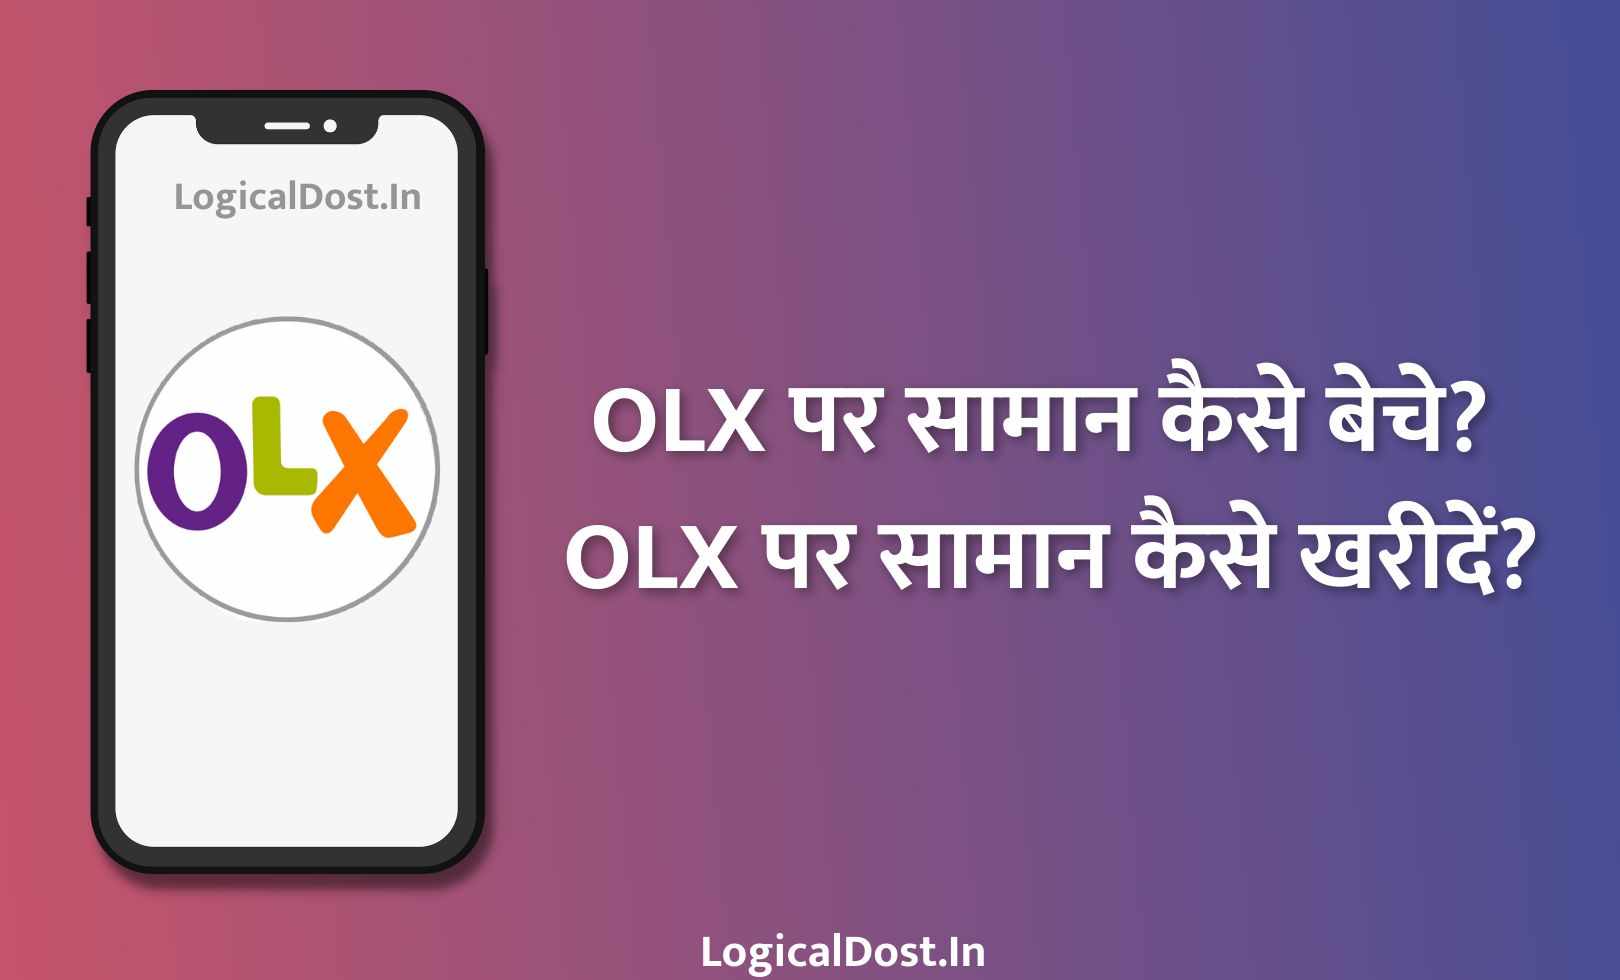 Olx Me Id Login Kaise Karte Hai, Olx India App Account Login Kaise Hota  Hai